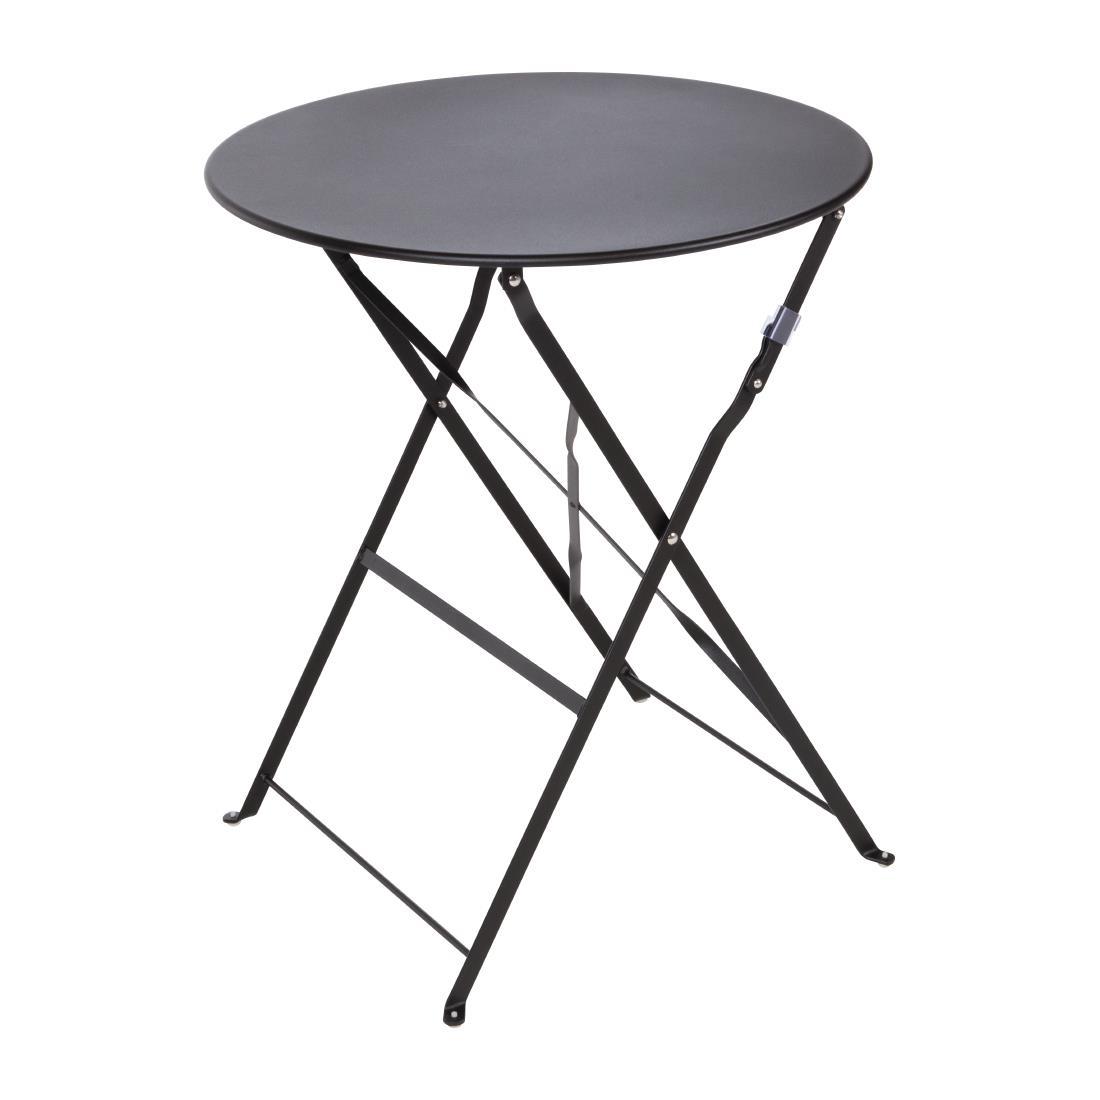 Bolero Black Pavement Style Steel Table 595mm - GH558  - 2